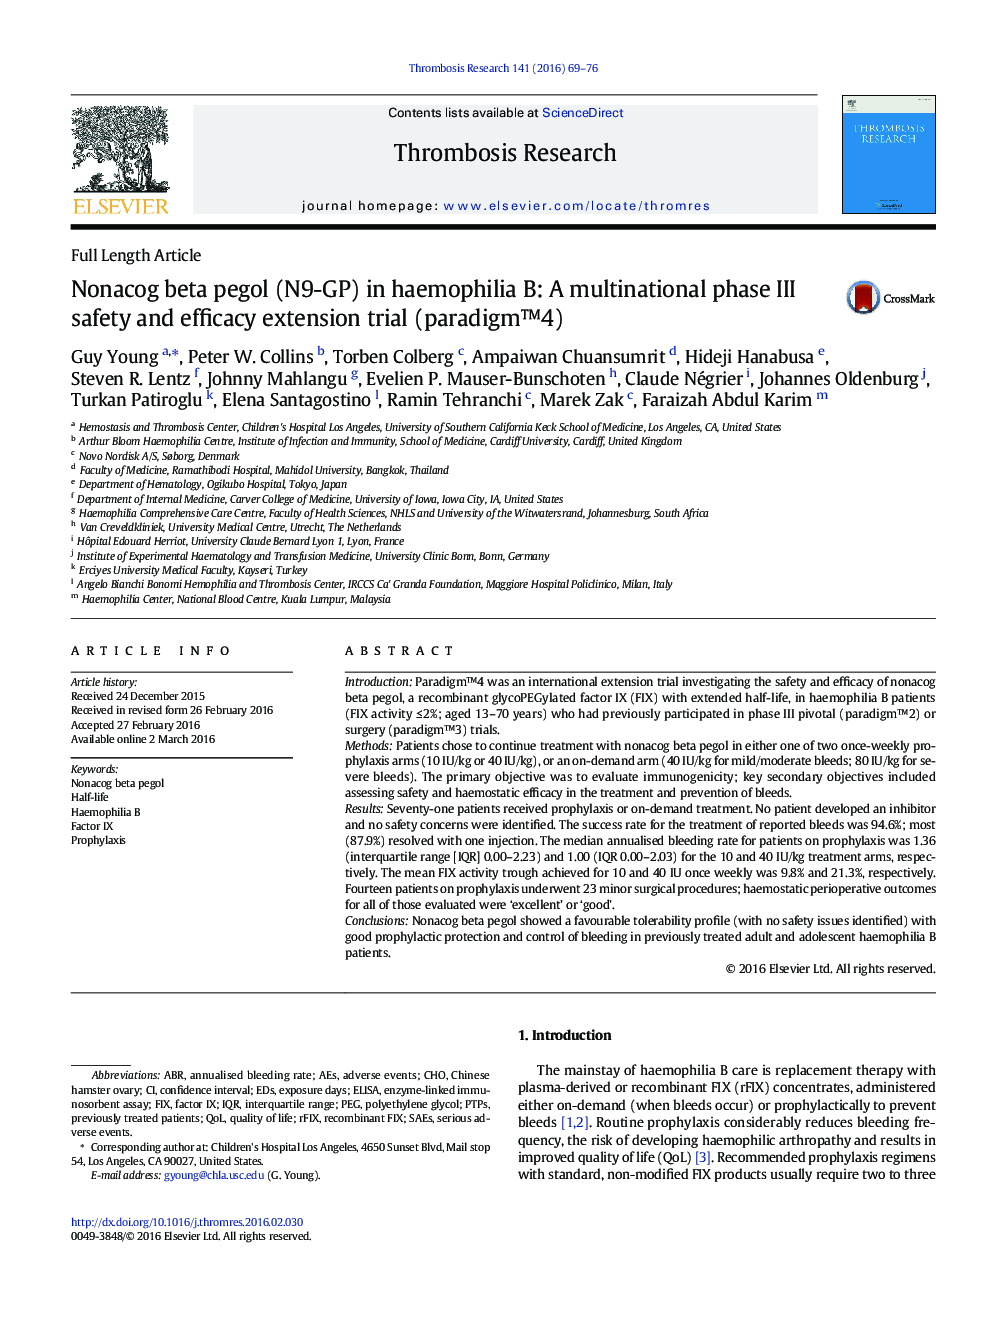 Nonacog beta pegol (N9-GP) in haemophilia B: A multinational phase III safety and efficacy extension trial (paradigmâ¢4)